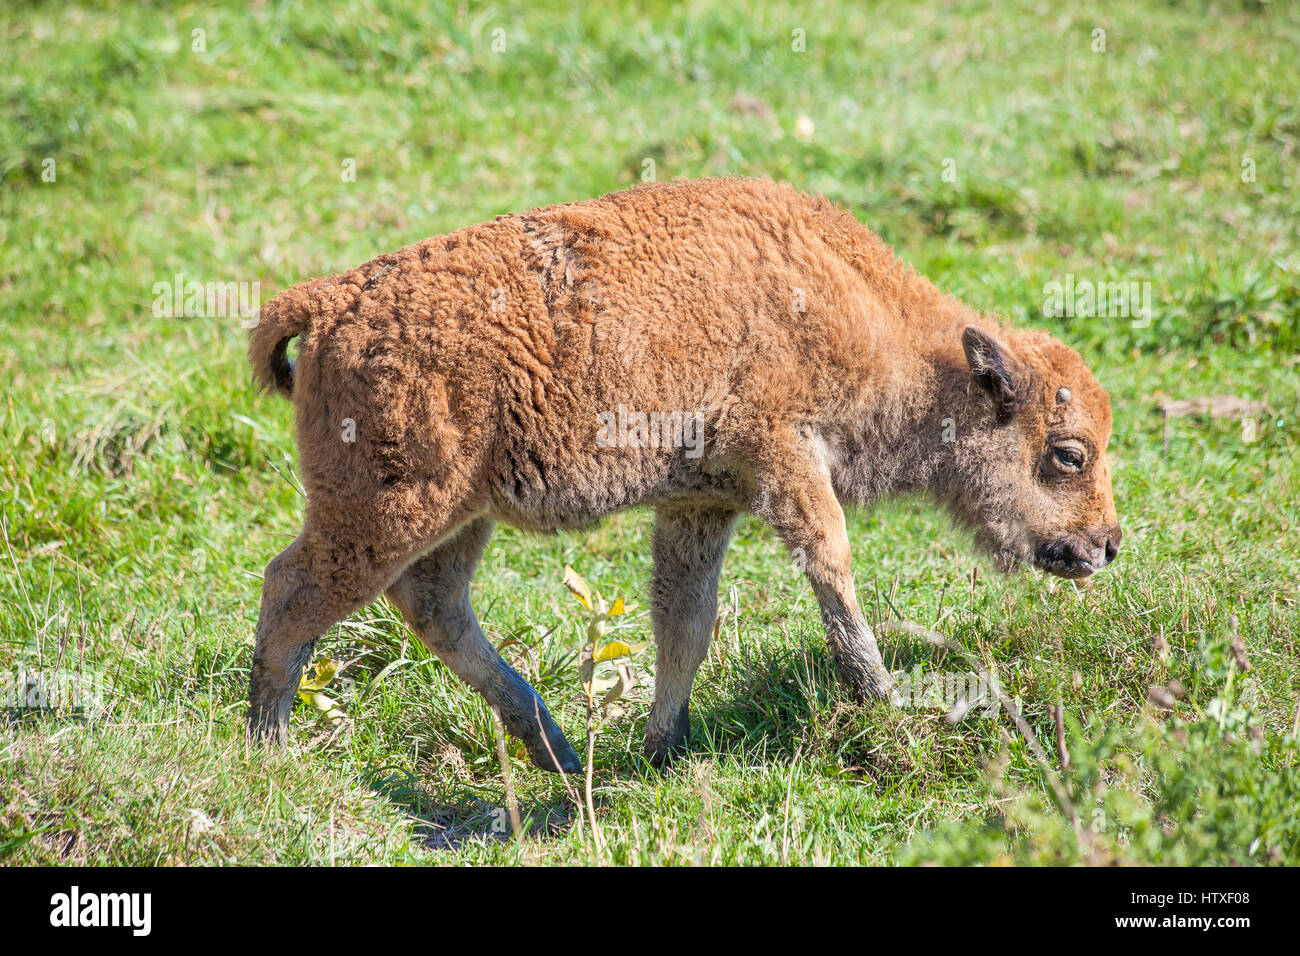 Baby buffalo (calf) walking on green grass. Stock Photo